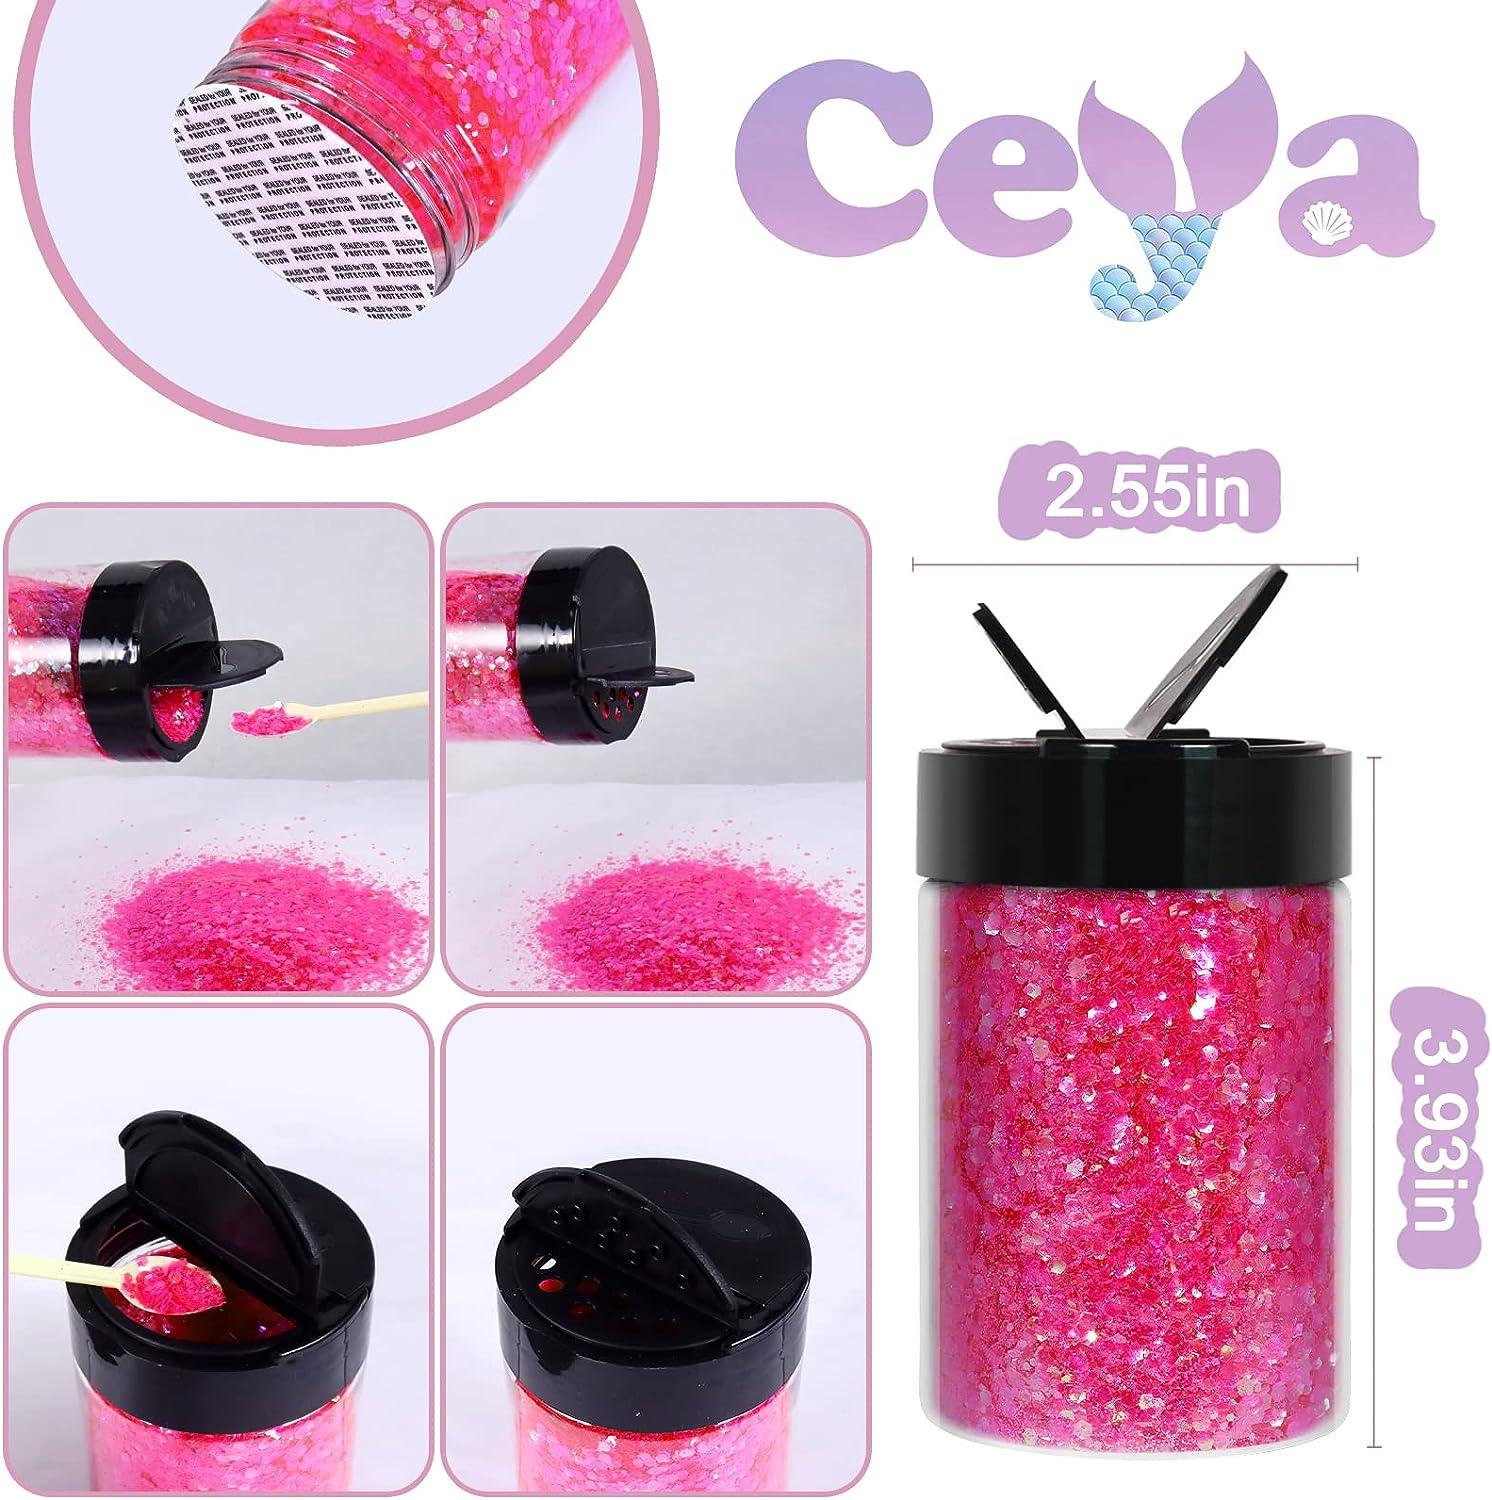  Ceya Mica Powder, 5.3oz/ 150g Millennial Pink